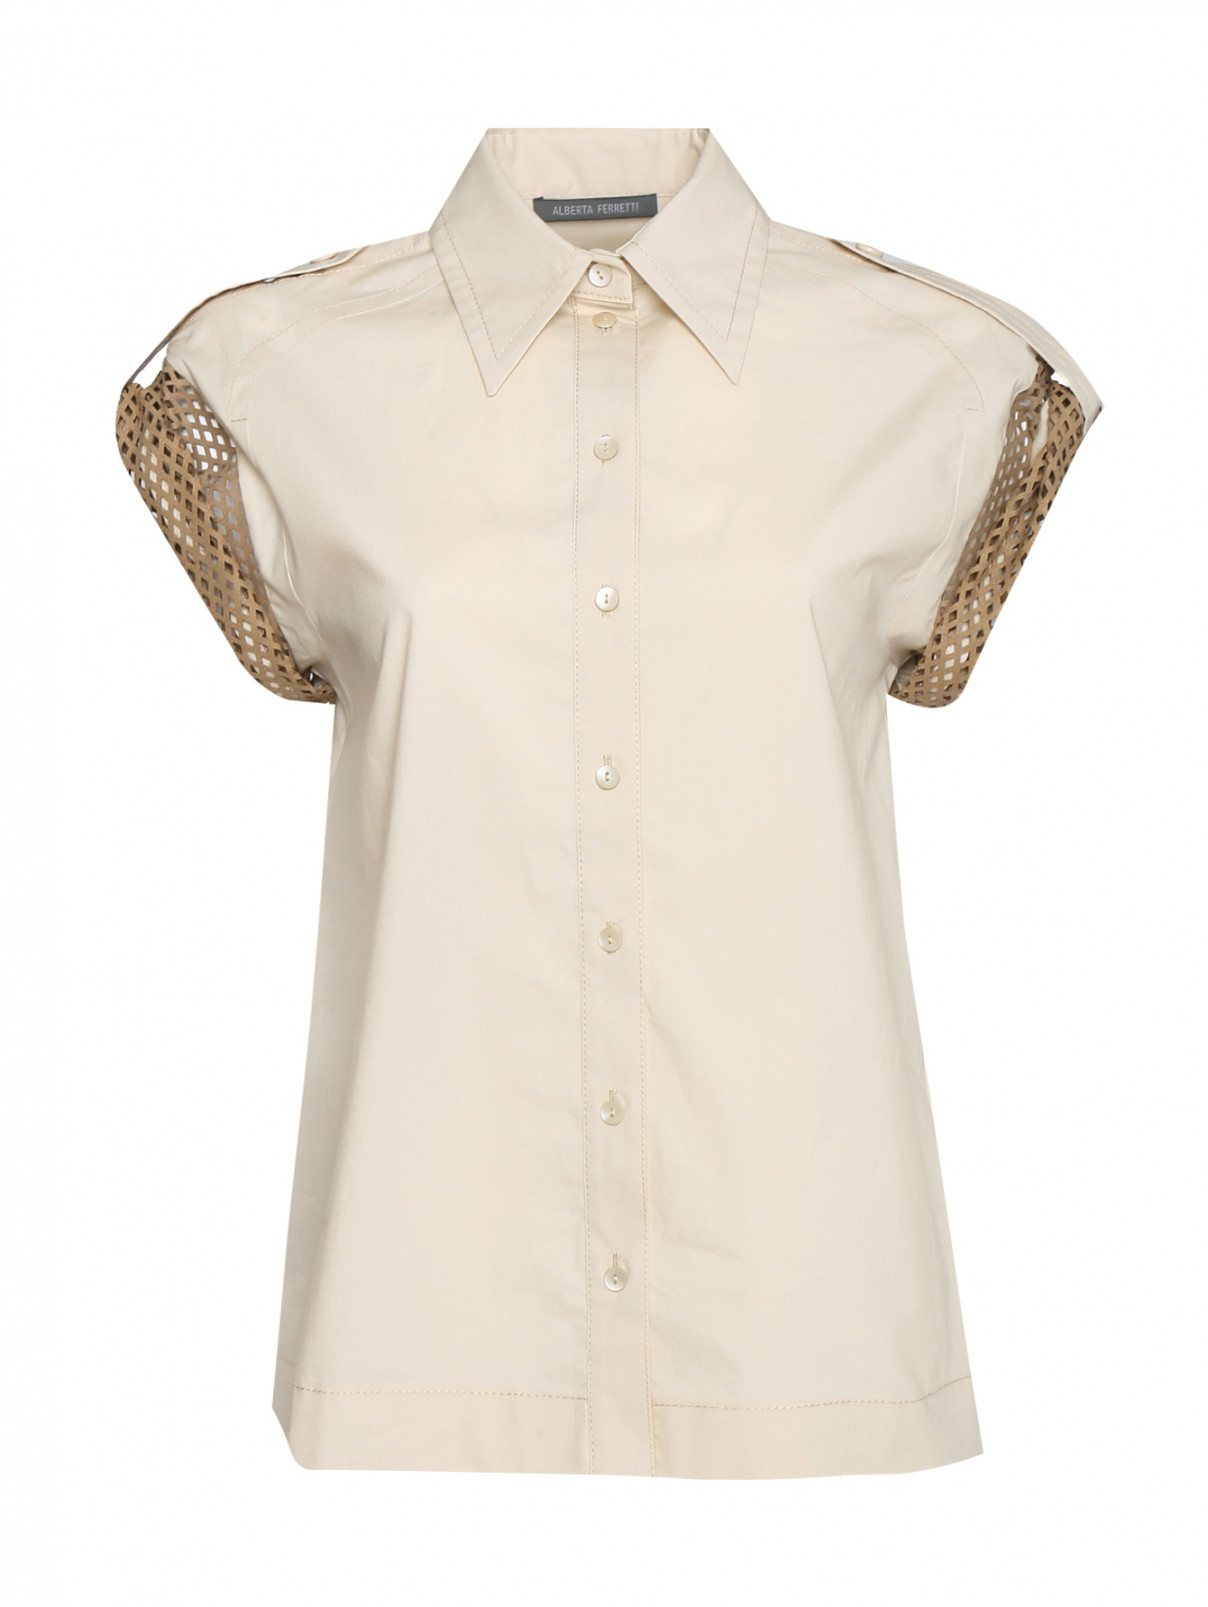 Рубашка из хлопка с коротким рукавом Alberta Ferretti  –  Общий вид  – Цвет:  Бежевый